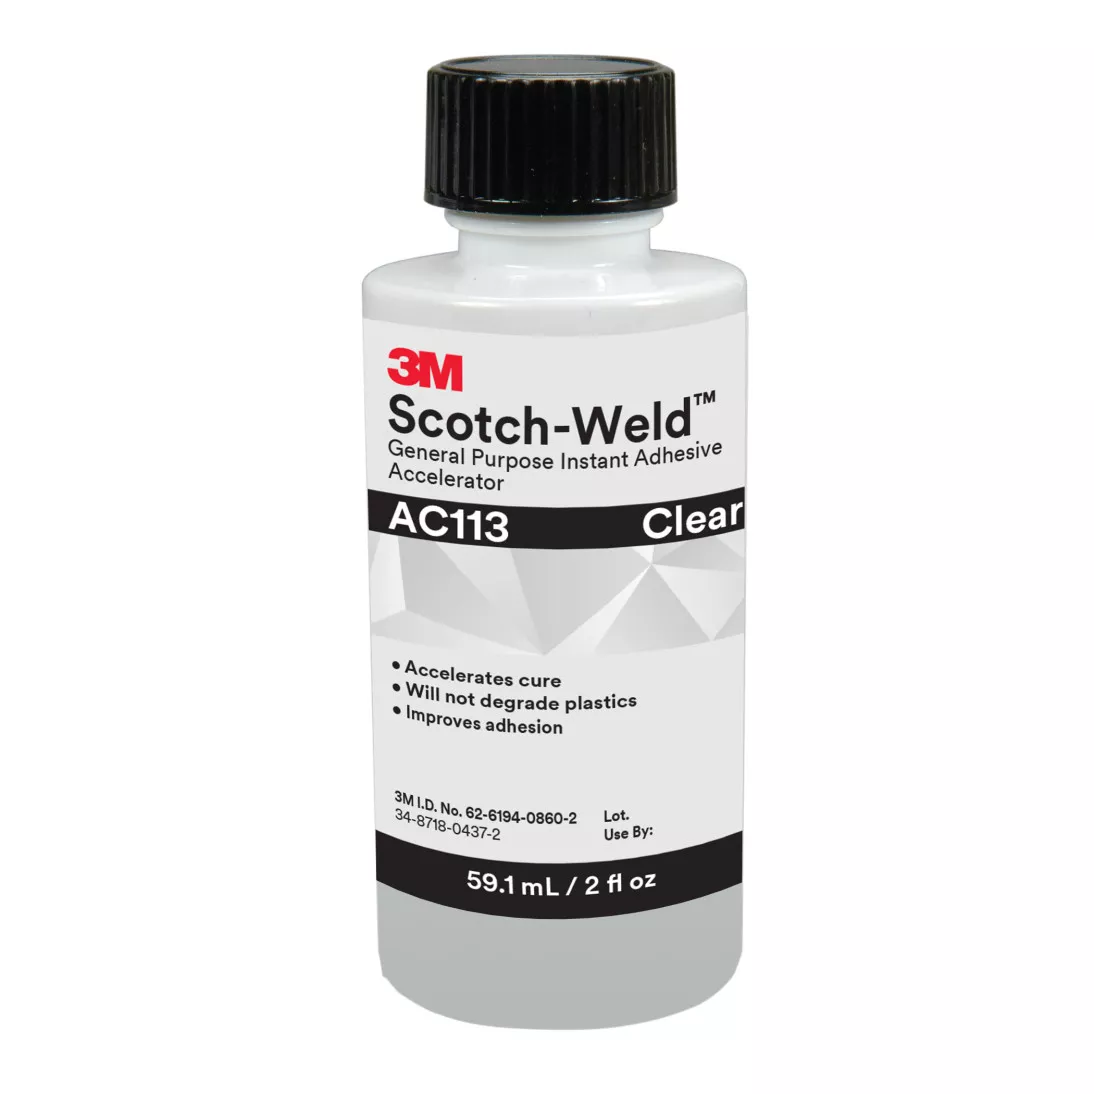 3M™ Scotch-Weld™ General Purpose Instant Adhesive Accelerator AC113,
Clear/Light Amber, 2 fl oz Bottle, 10/case